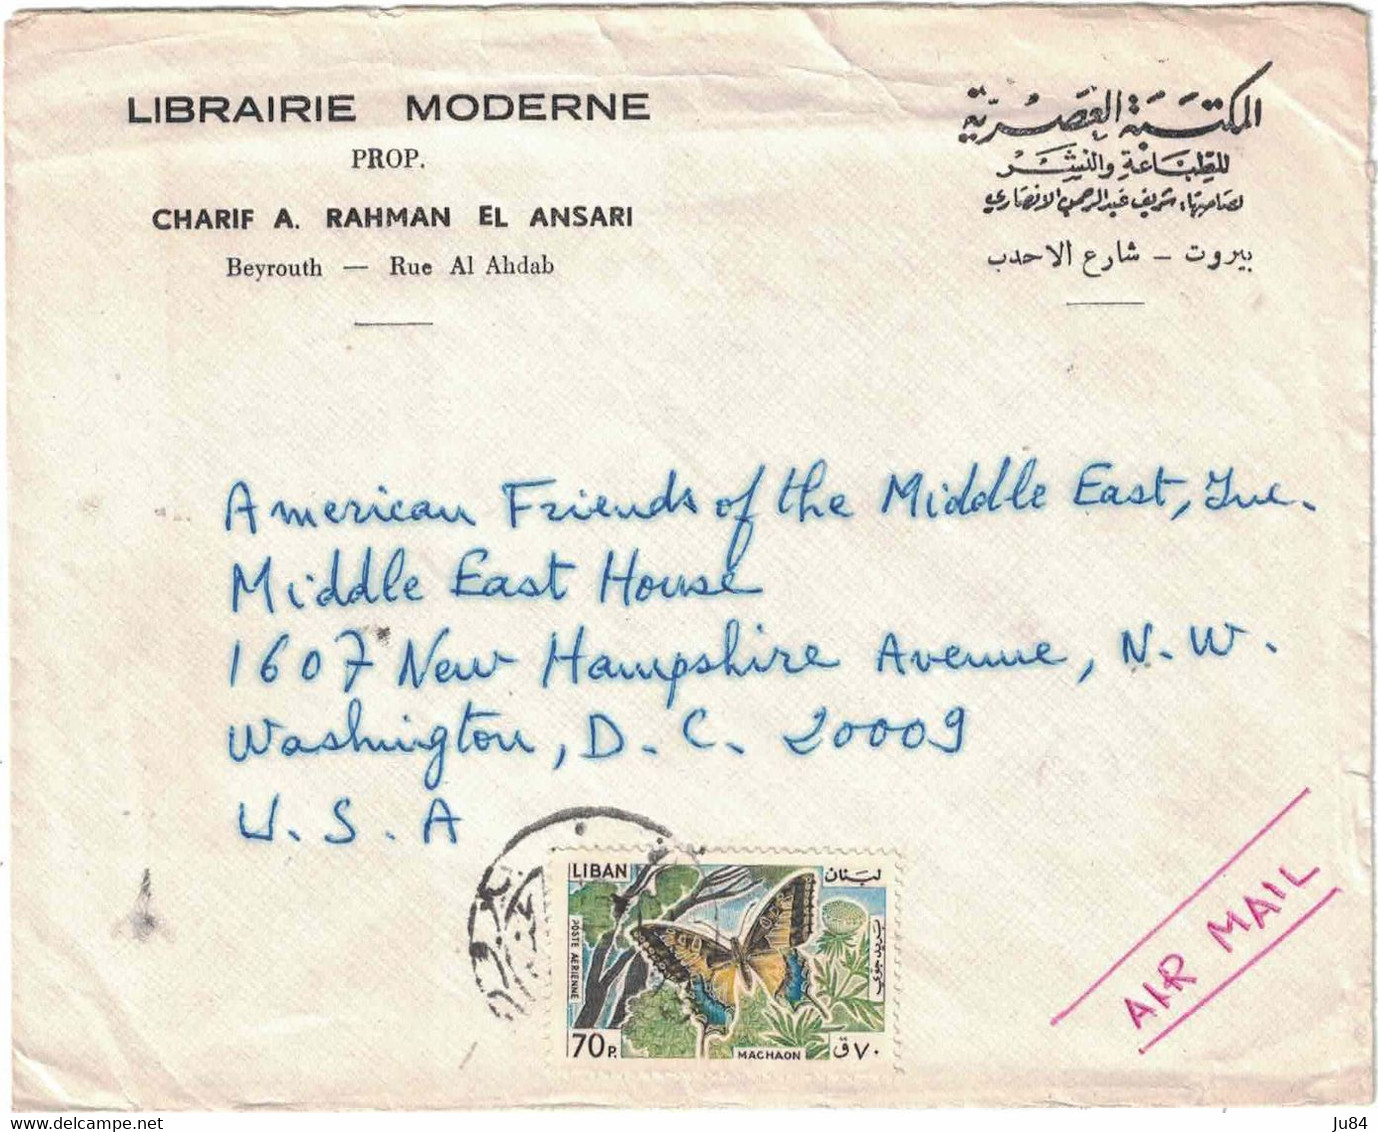 Liban - Beyrouth - Entête Librairie Moderne - Charif A. Rahman El Ansari - Lettre Avion Pour Washington (USA) - 1969 - Lebanon